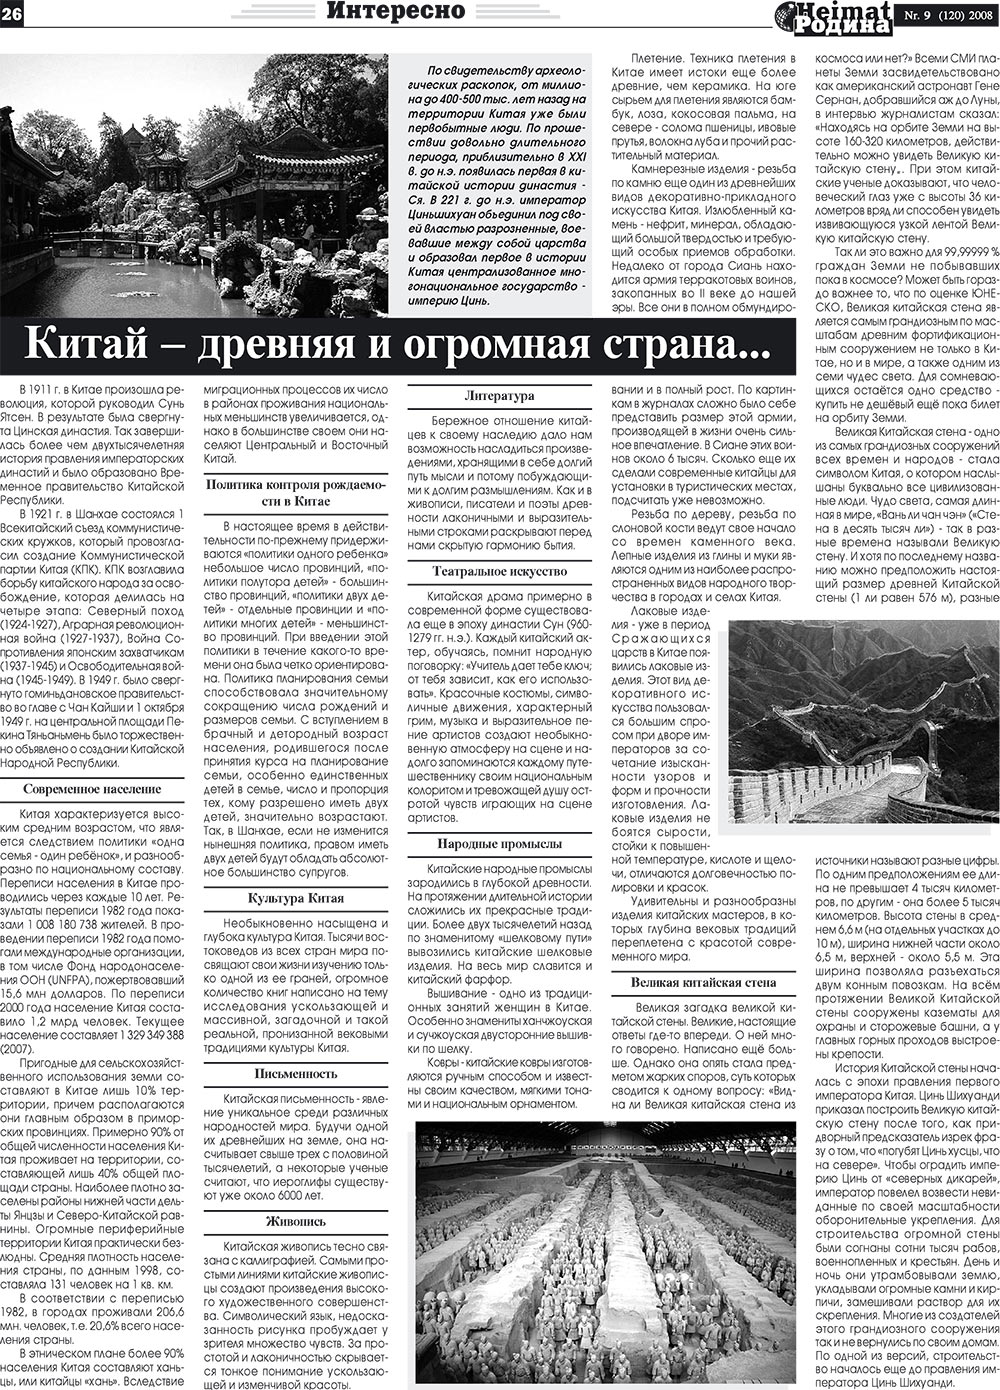 Heimat-Родина, газета. 2008 №9 стр.26